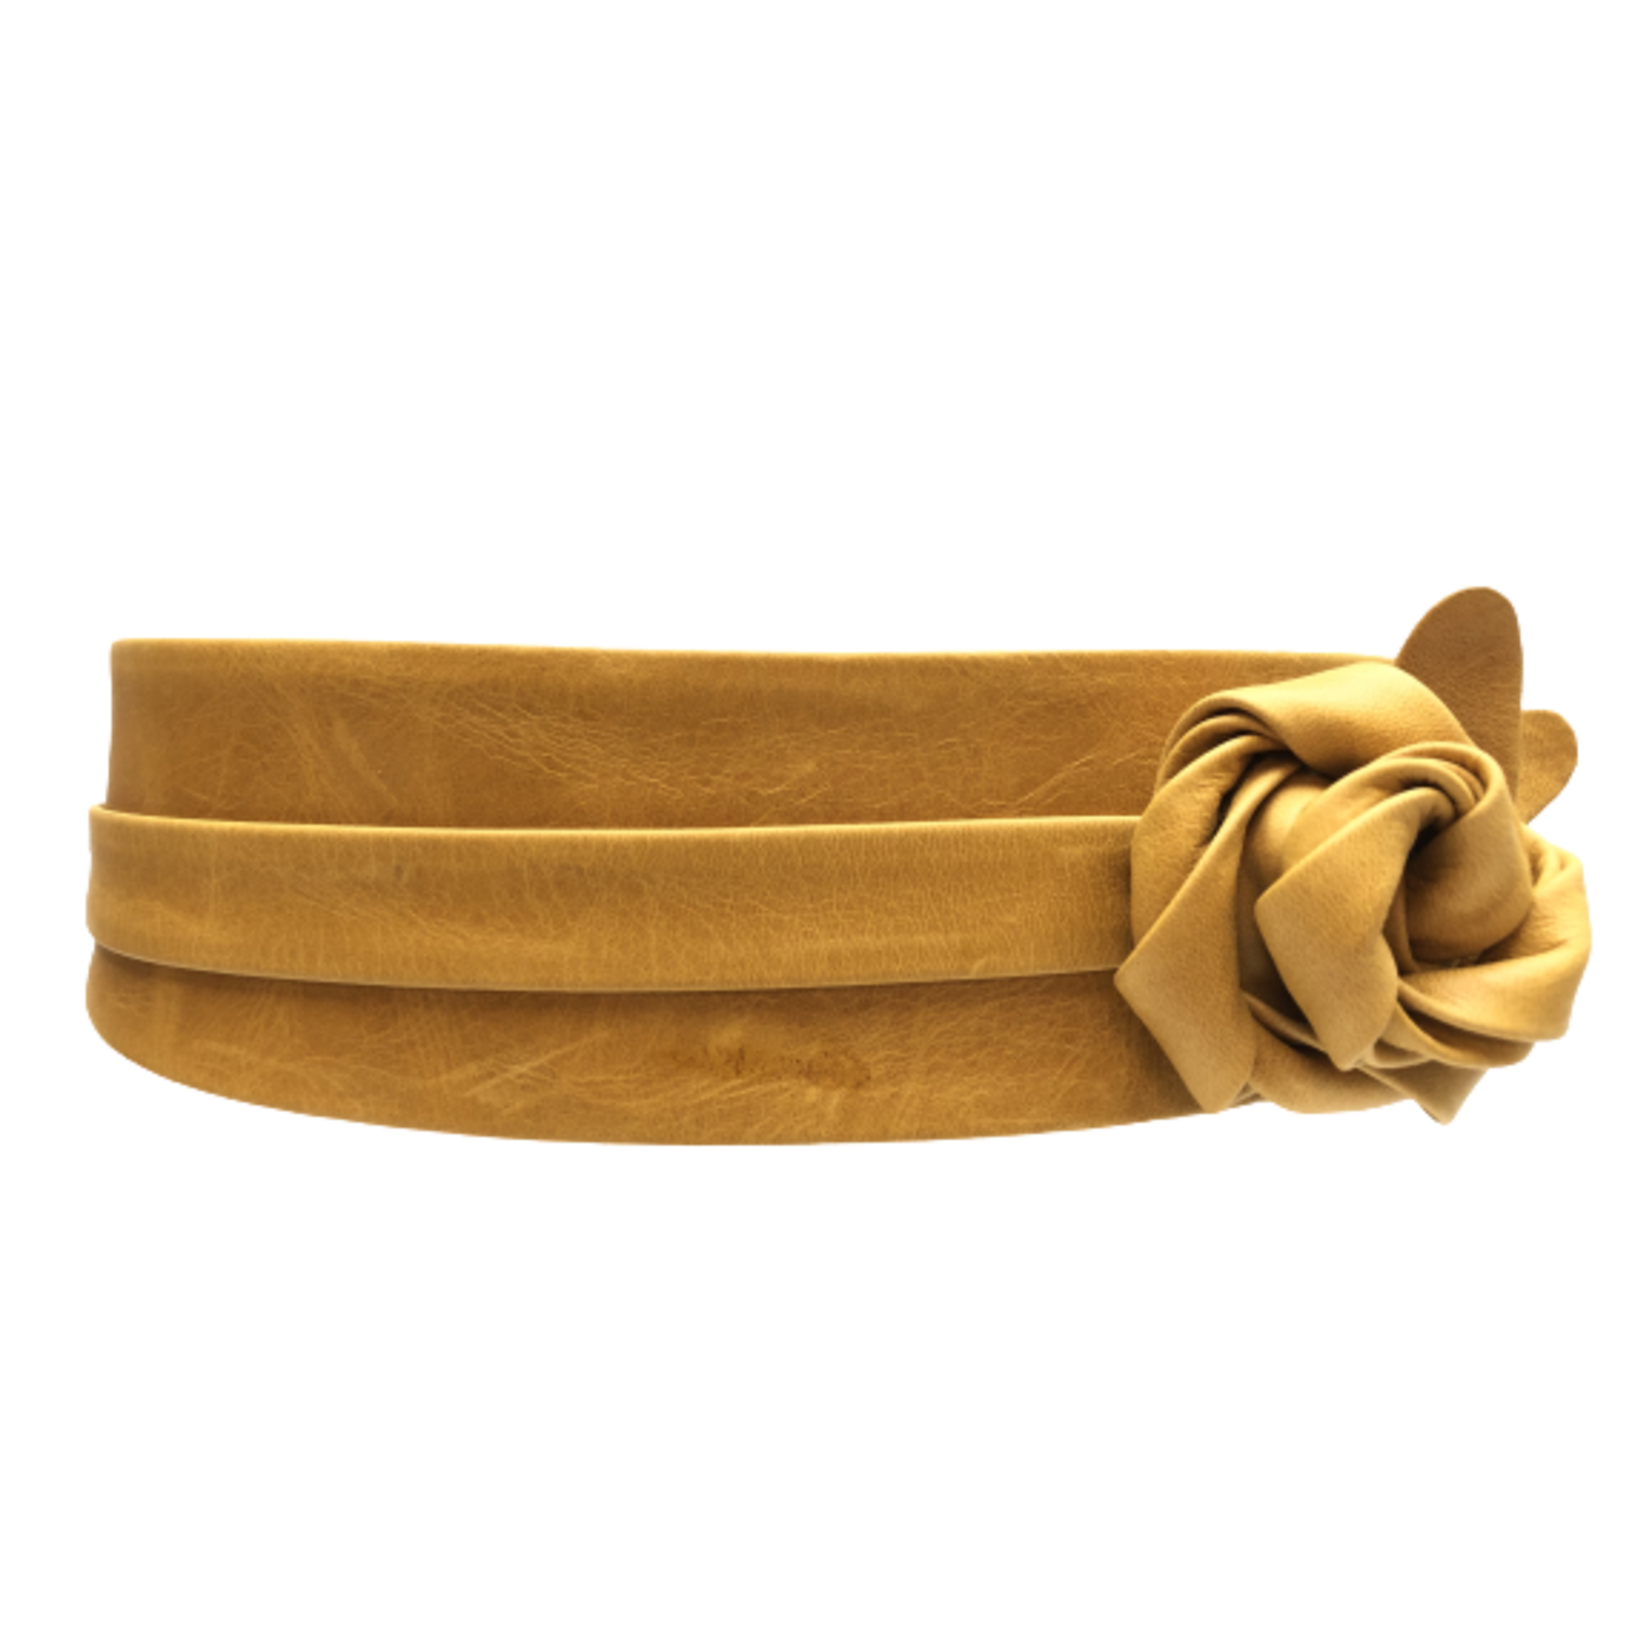 ADA Original Leather Wrap Belt in Mustard